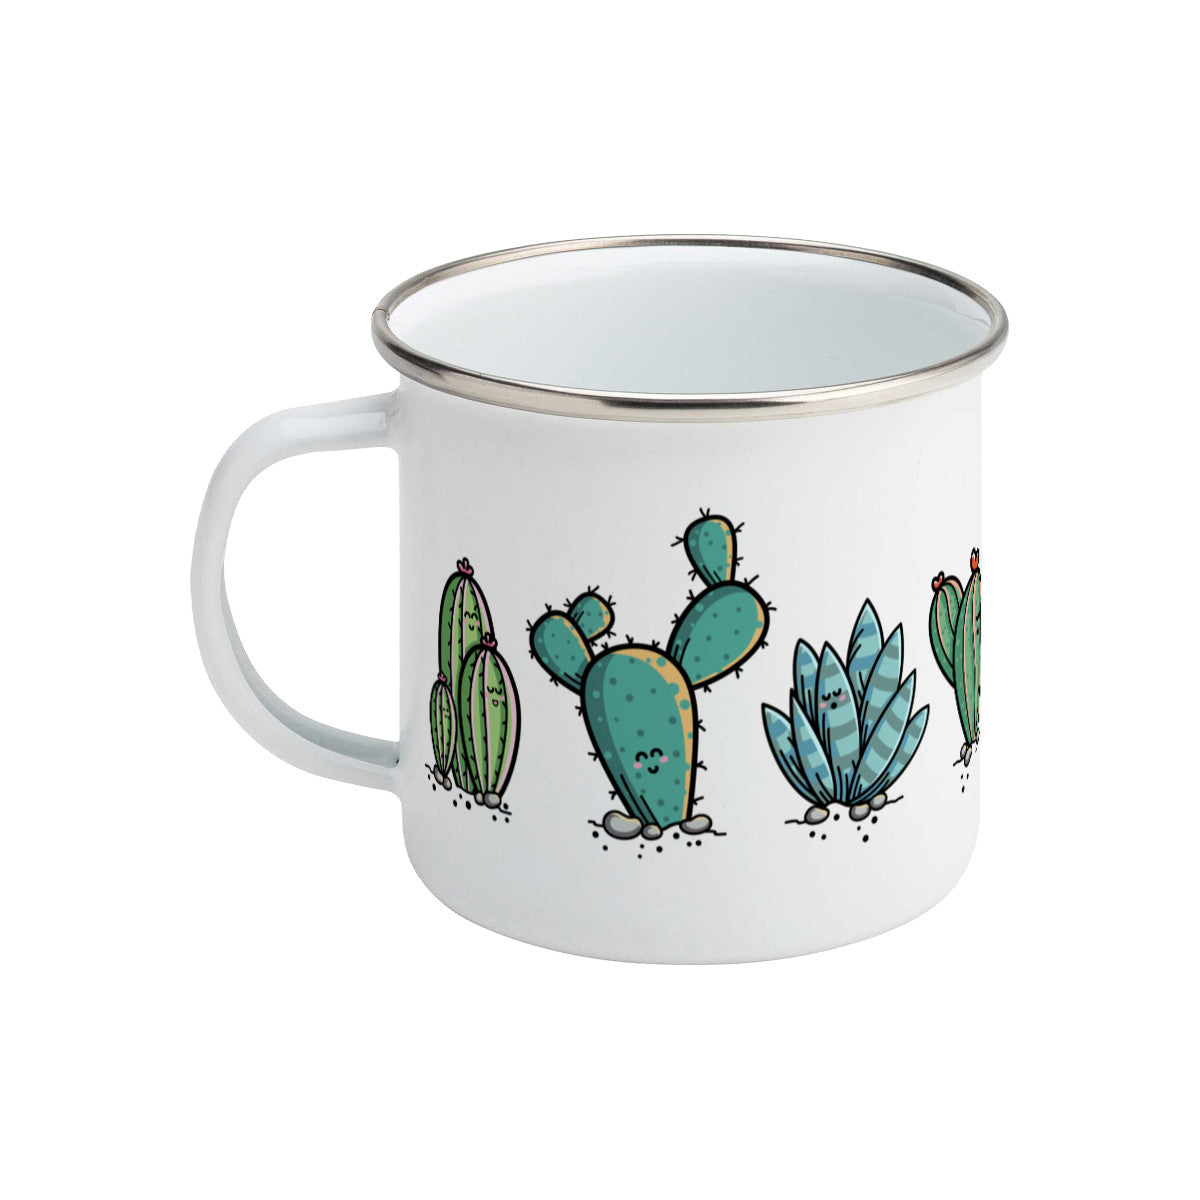 Four kawaii cute cactus plants design on a silver rimmed white enamel mug, showing LHS